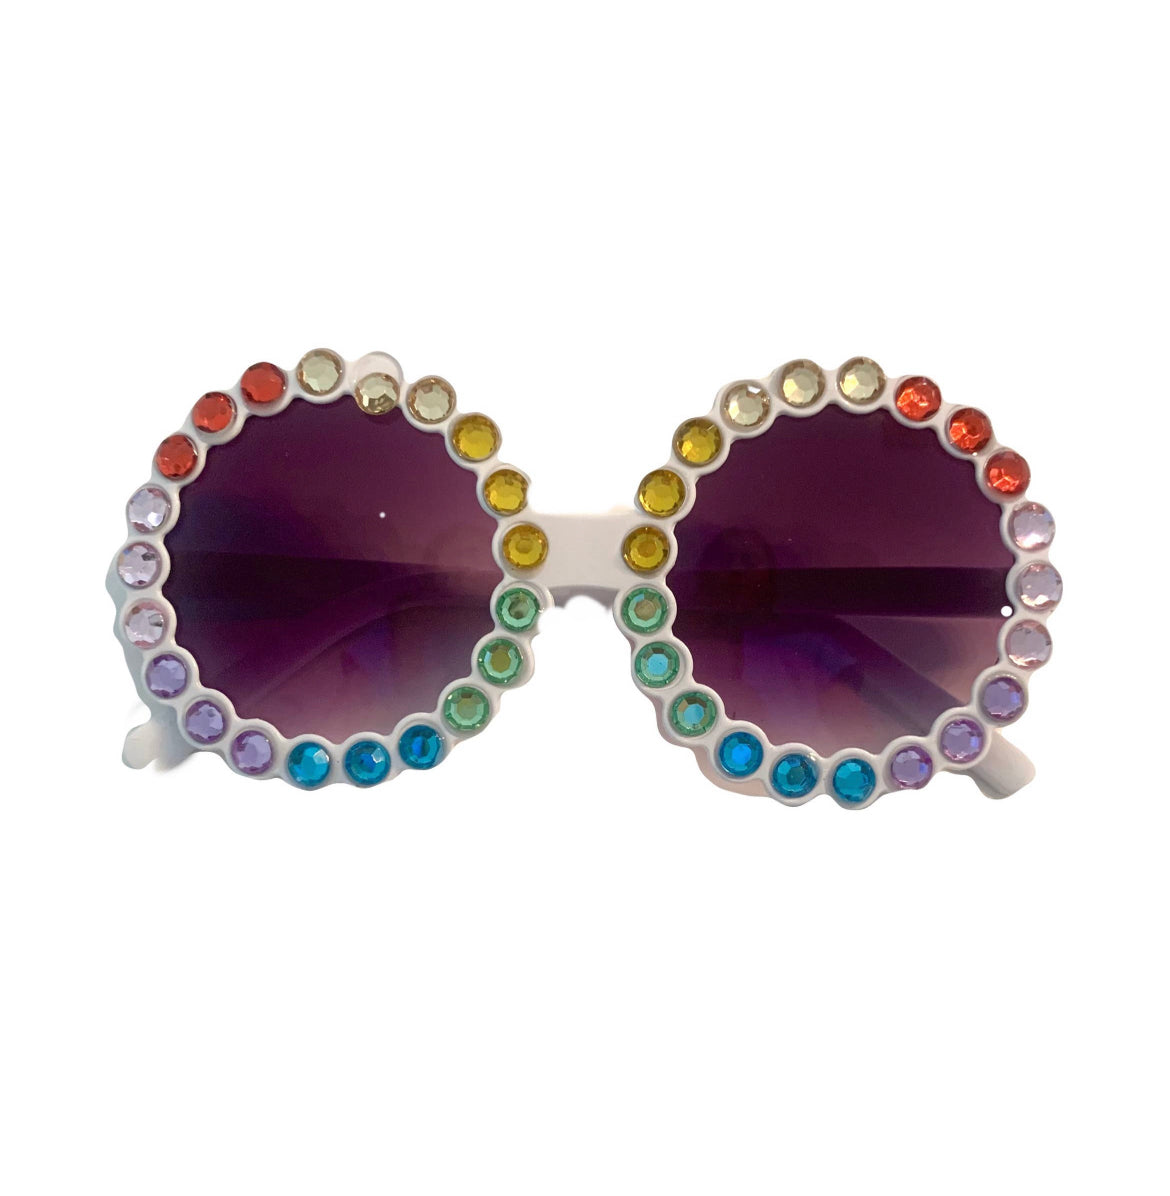 Rainbow stoned glasses